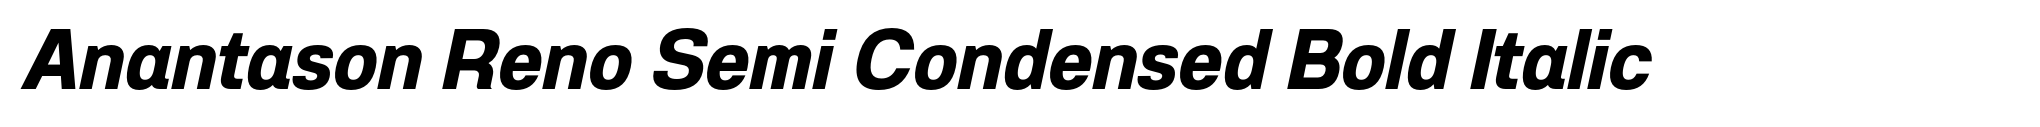 Anantason Reno Semi Condensed Bold Italic image